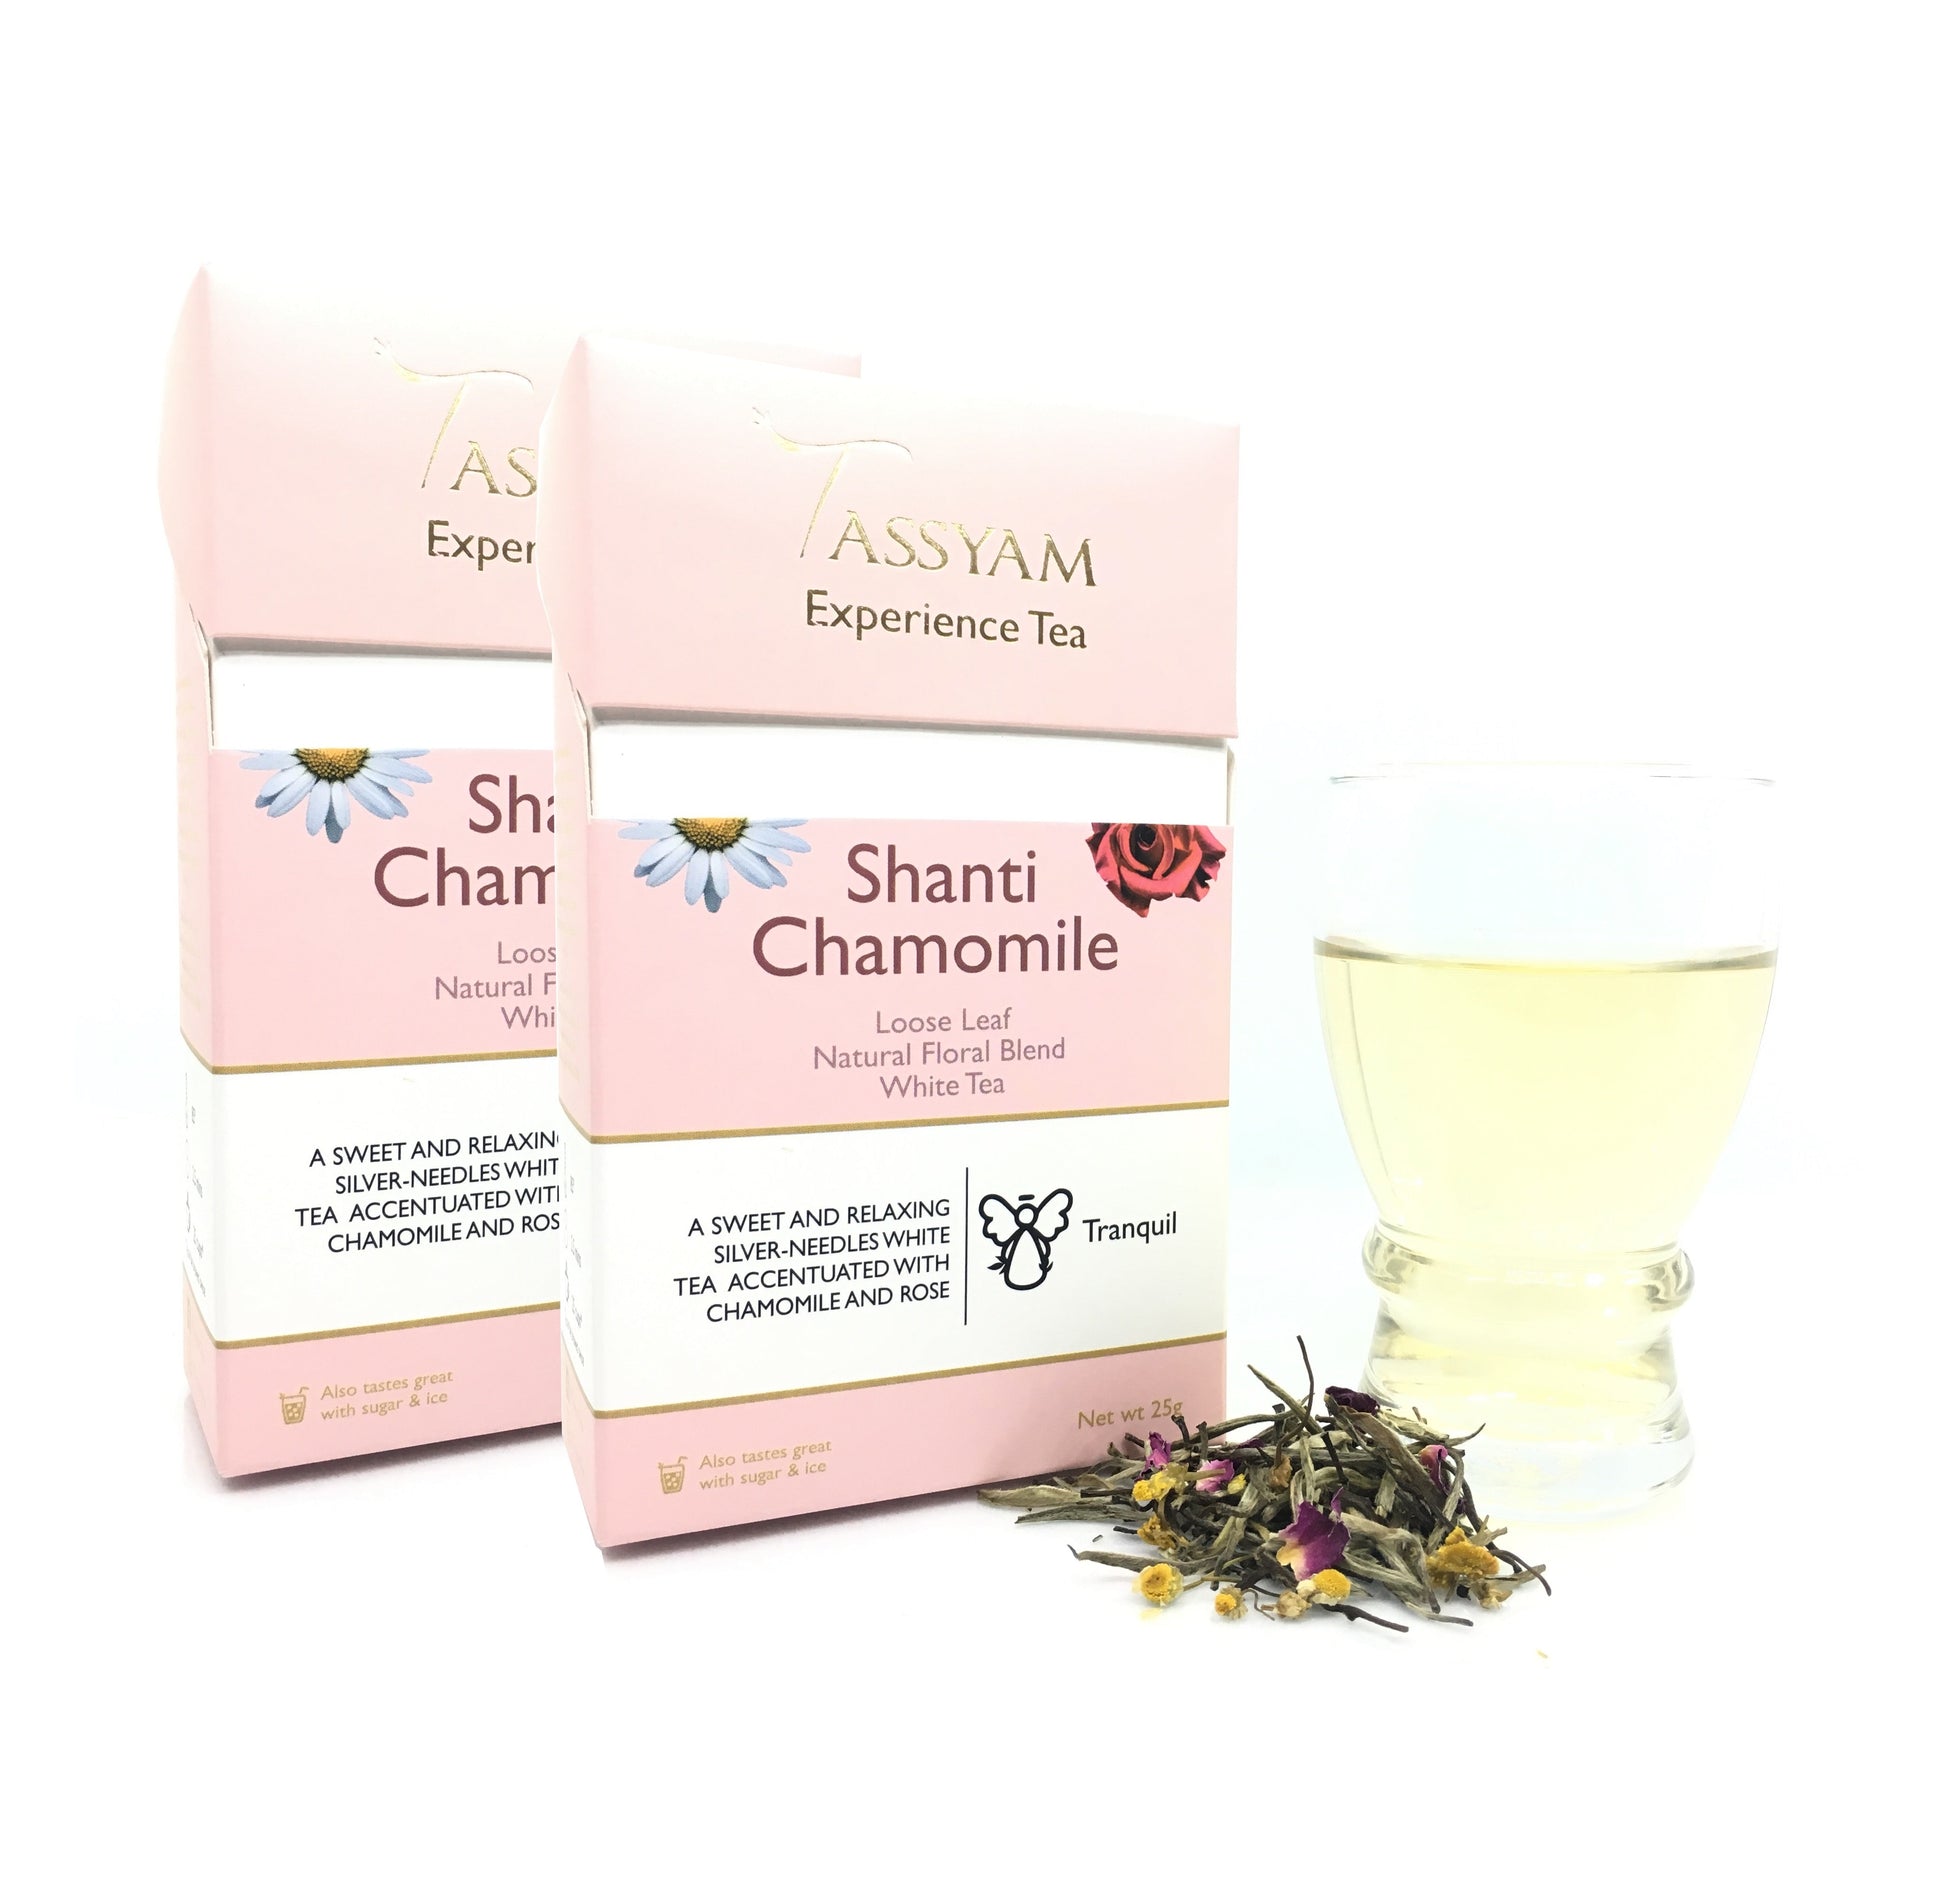 Shanti Chamomile tea - Tassyam Organics